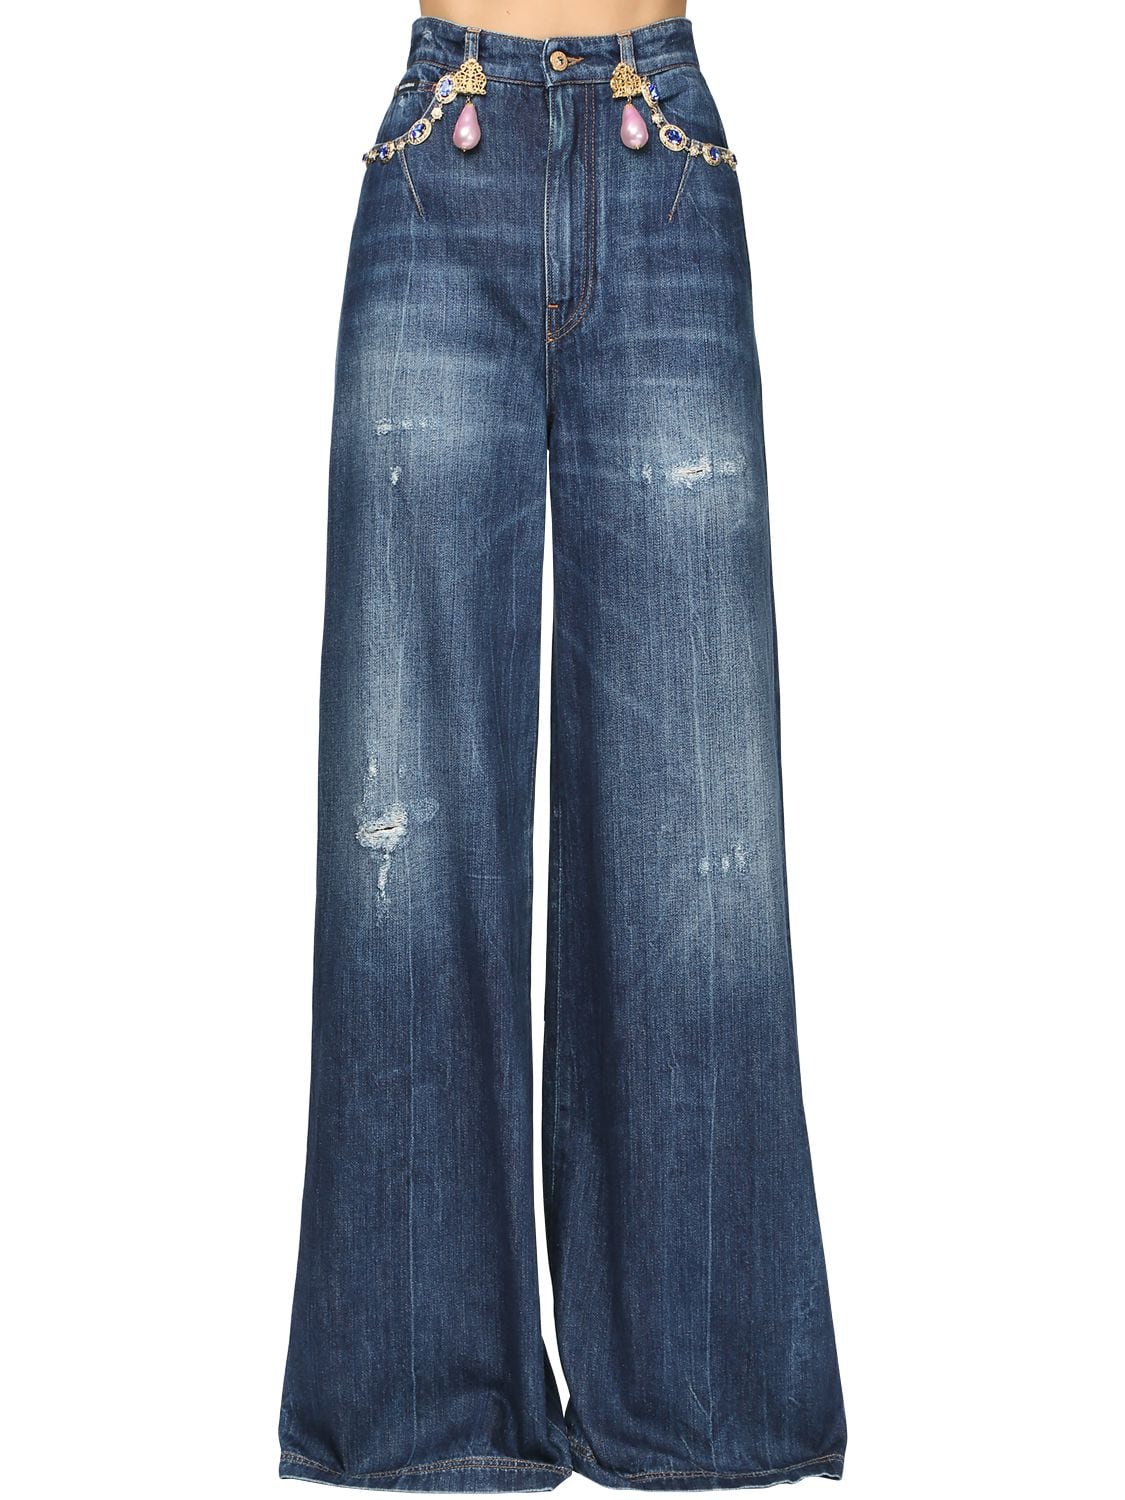 Dolce & Gabbana Jewel Embellished Cotton Denim Jeans